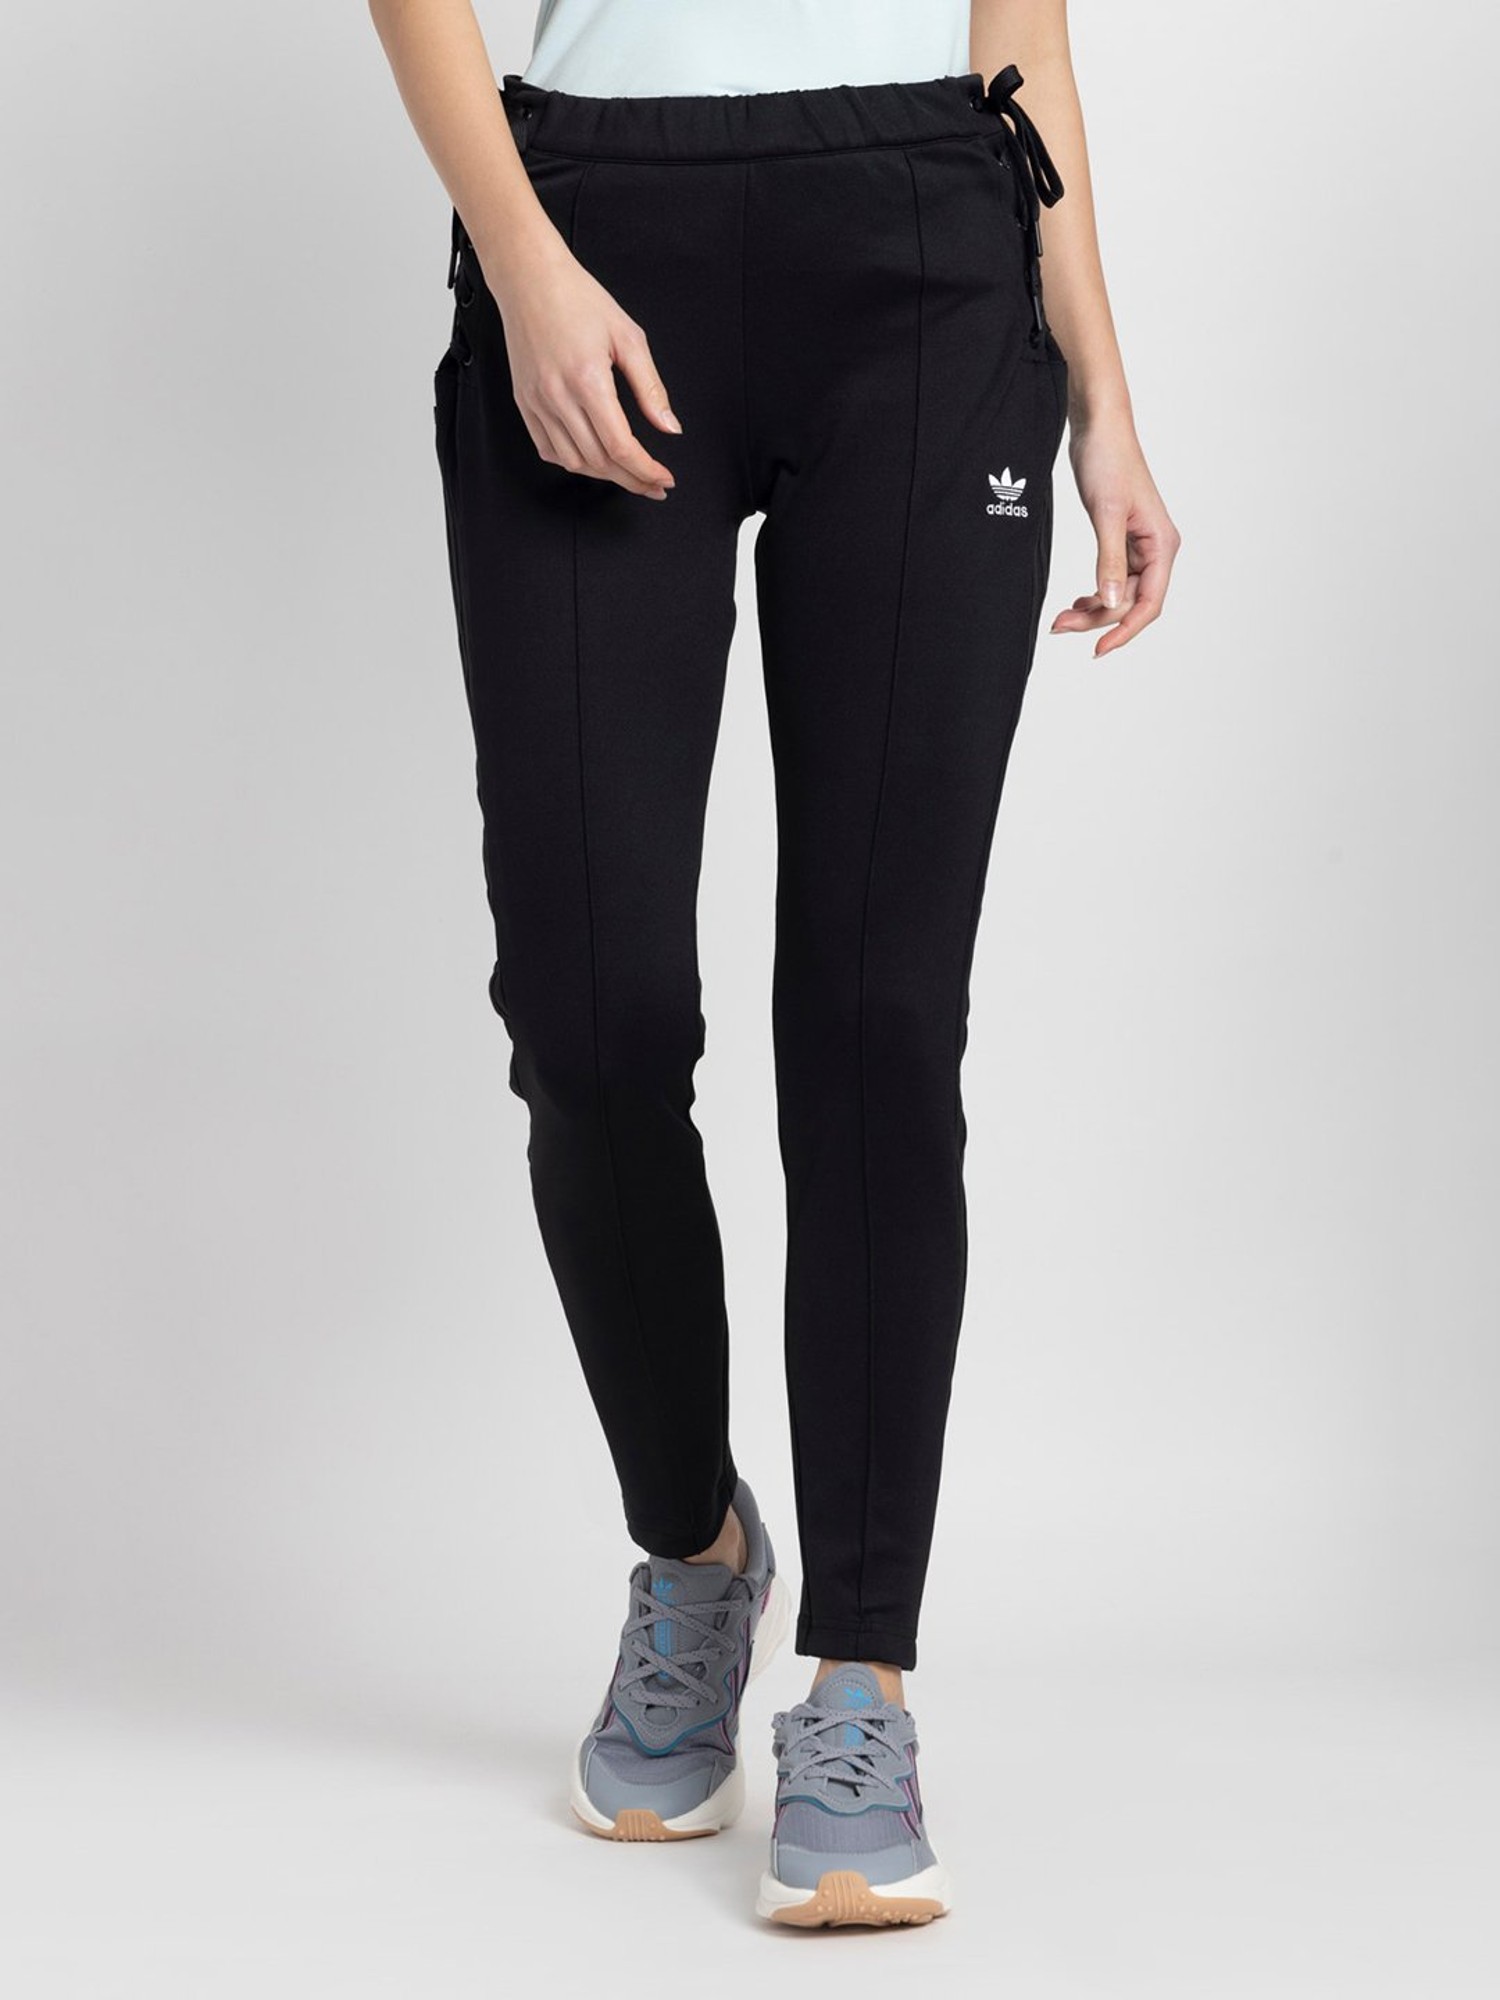 Adidas Originals Superstar Track Pants Black/Gold – CheapUndies